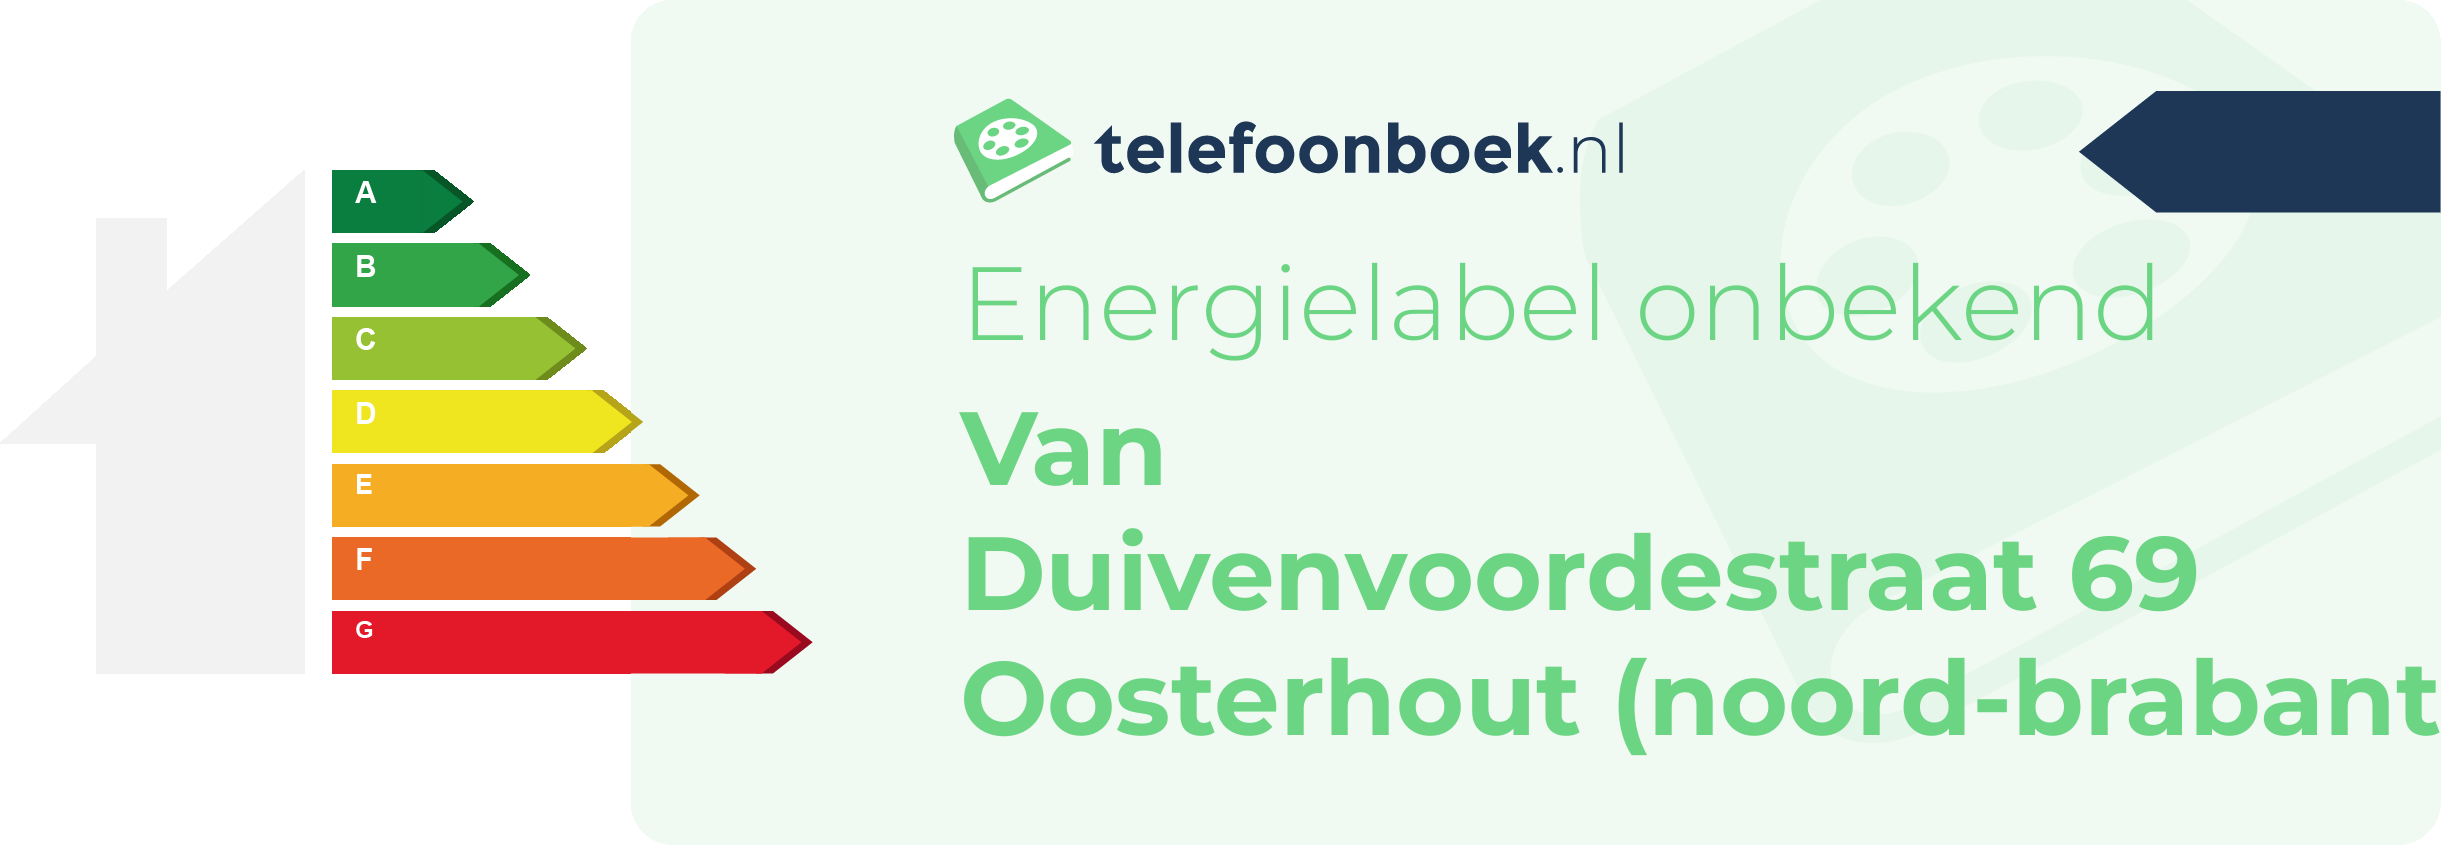 Energielabel Van Duivenvoordestraat 69 Oosterhout (Noord-Brabant)